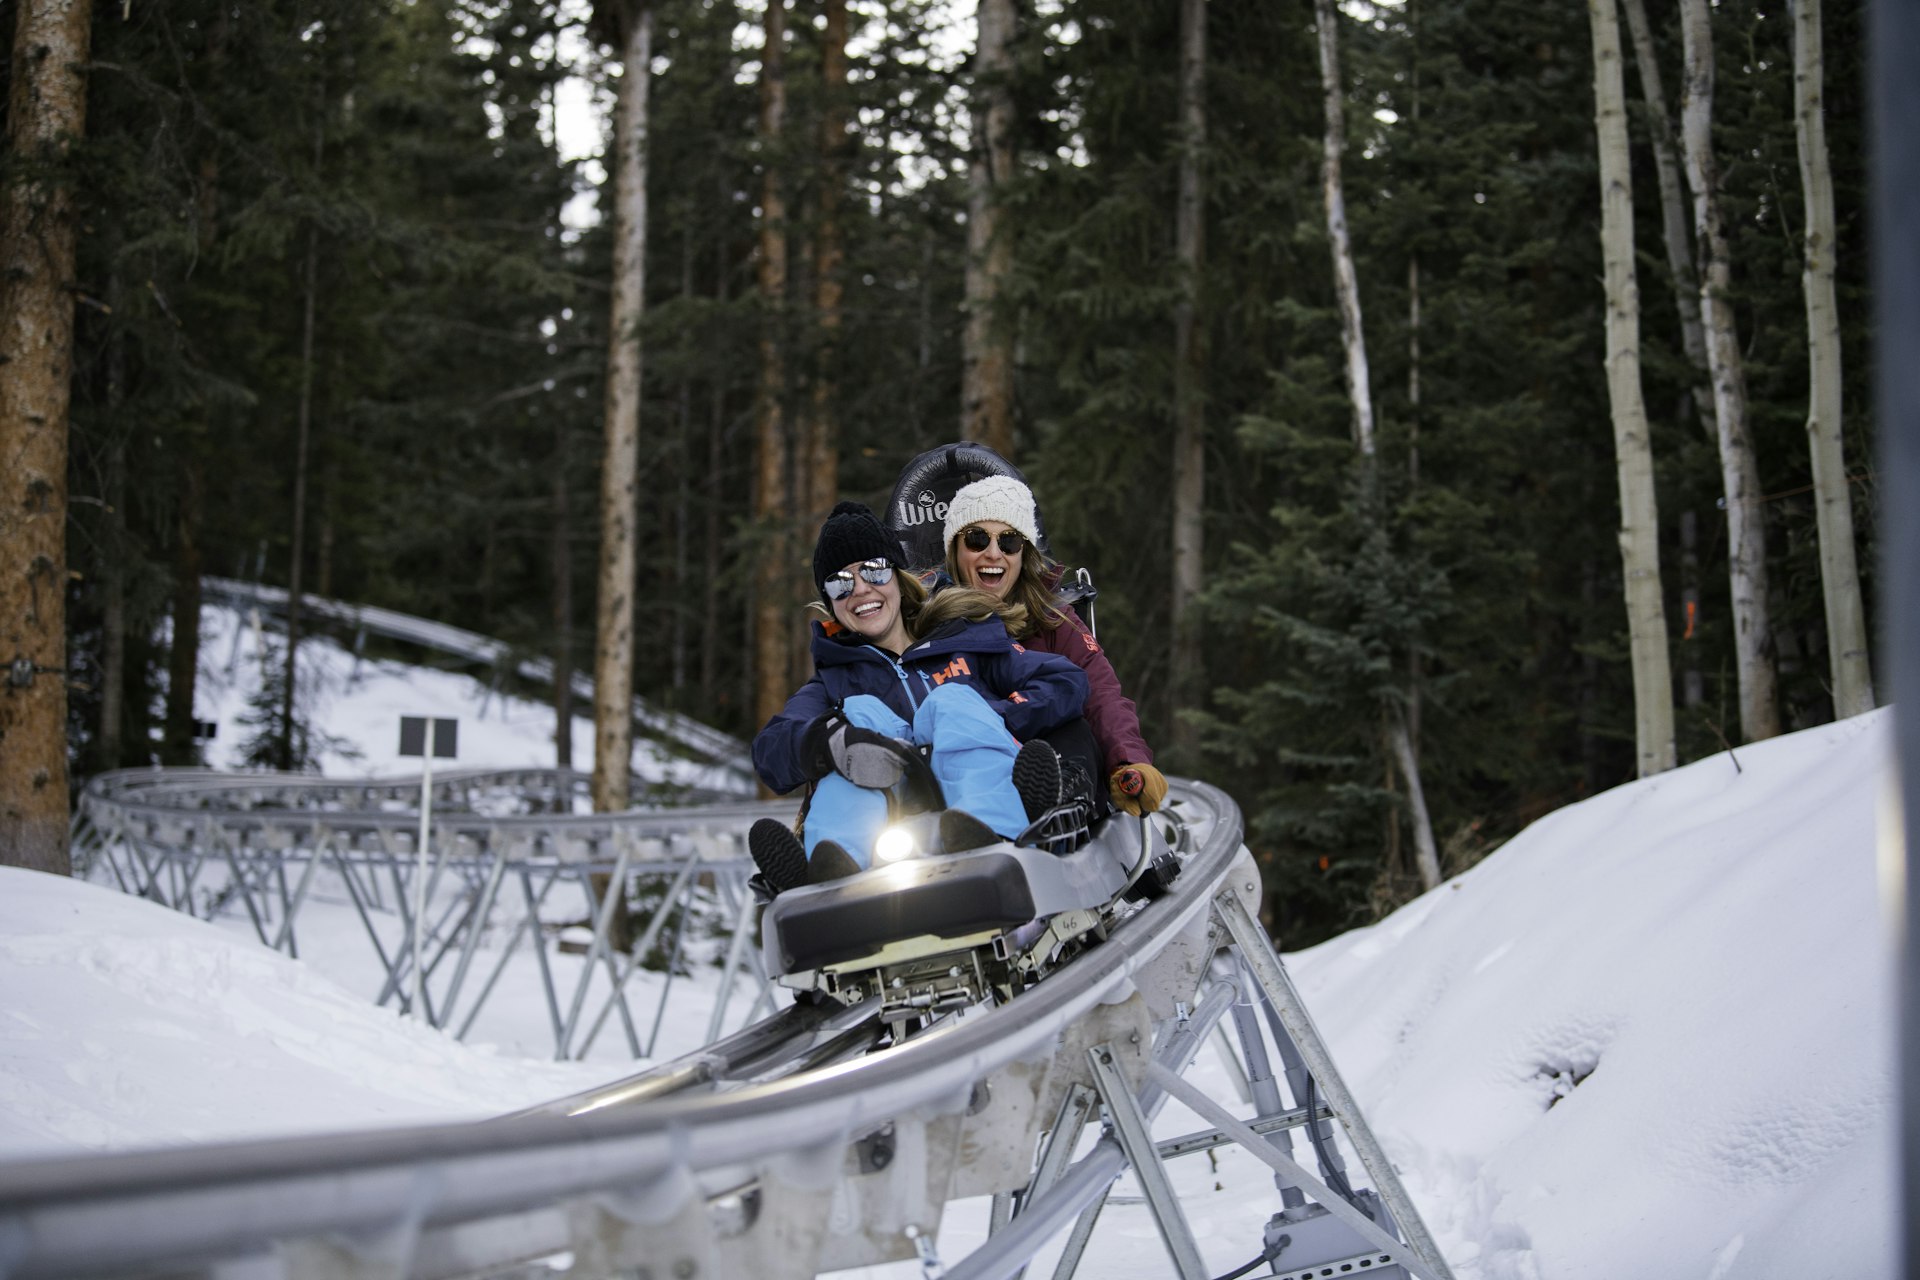 A family rides down a single car on a roller coaster through a snowy landscape